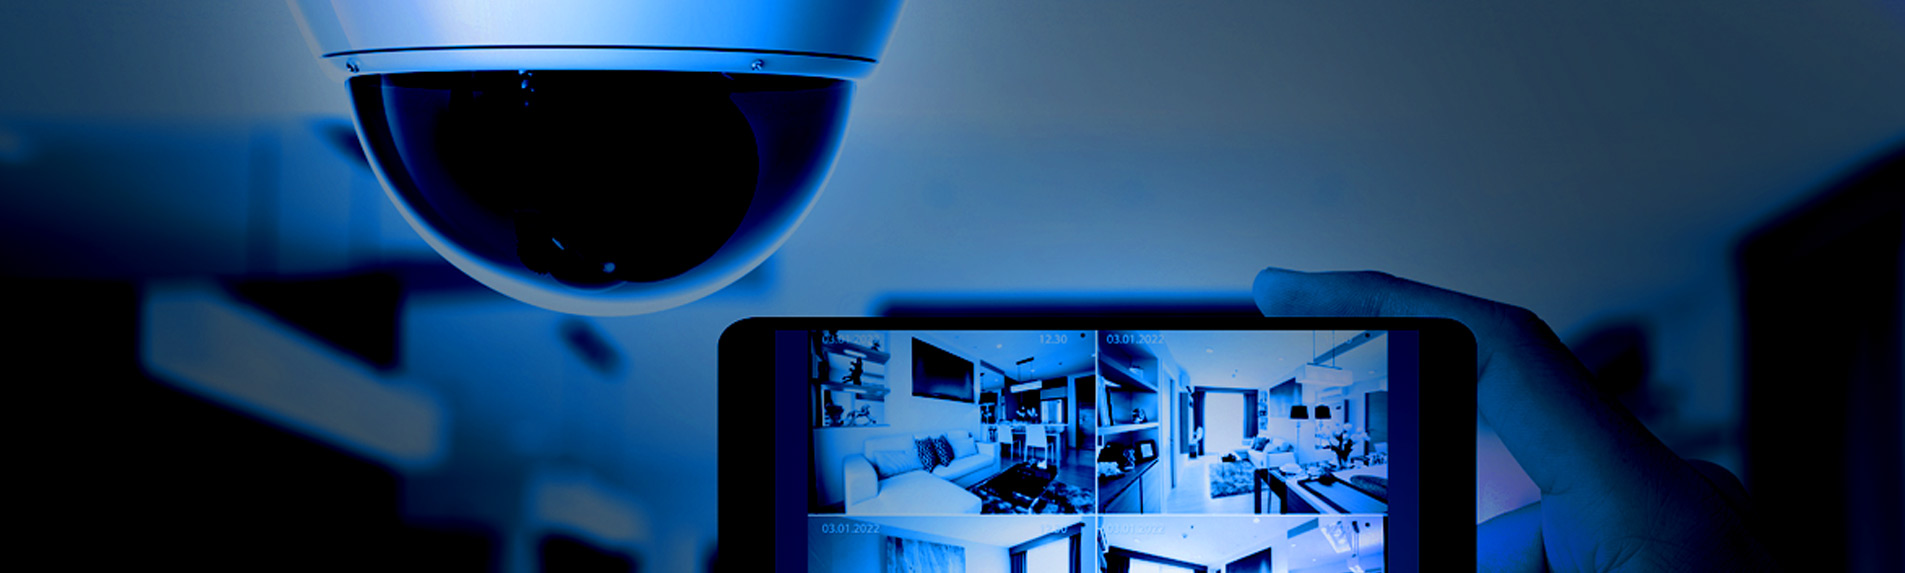 Northern Illinois #1 HD Video Surveillance System Professionals